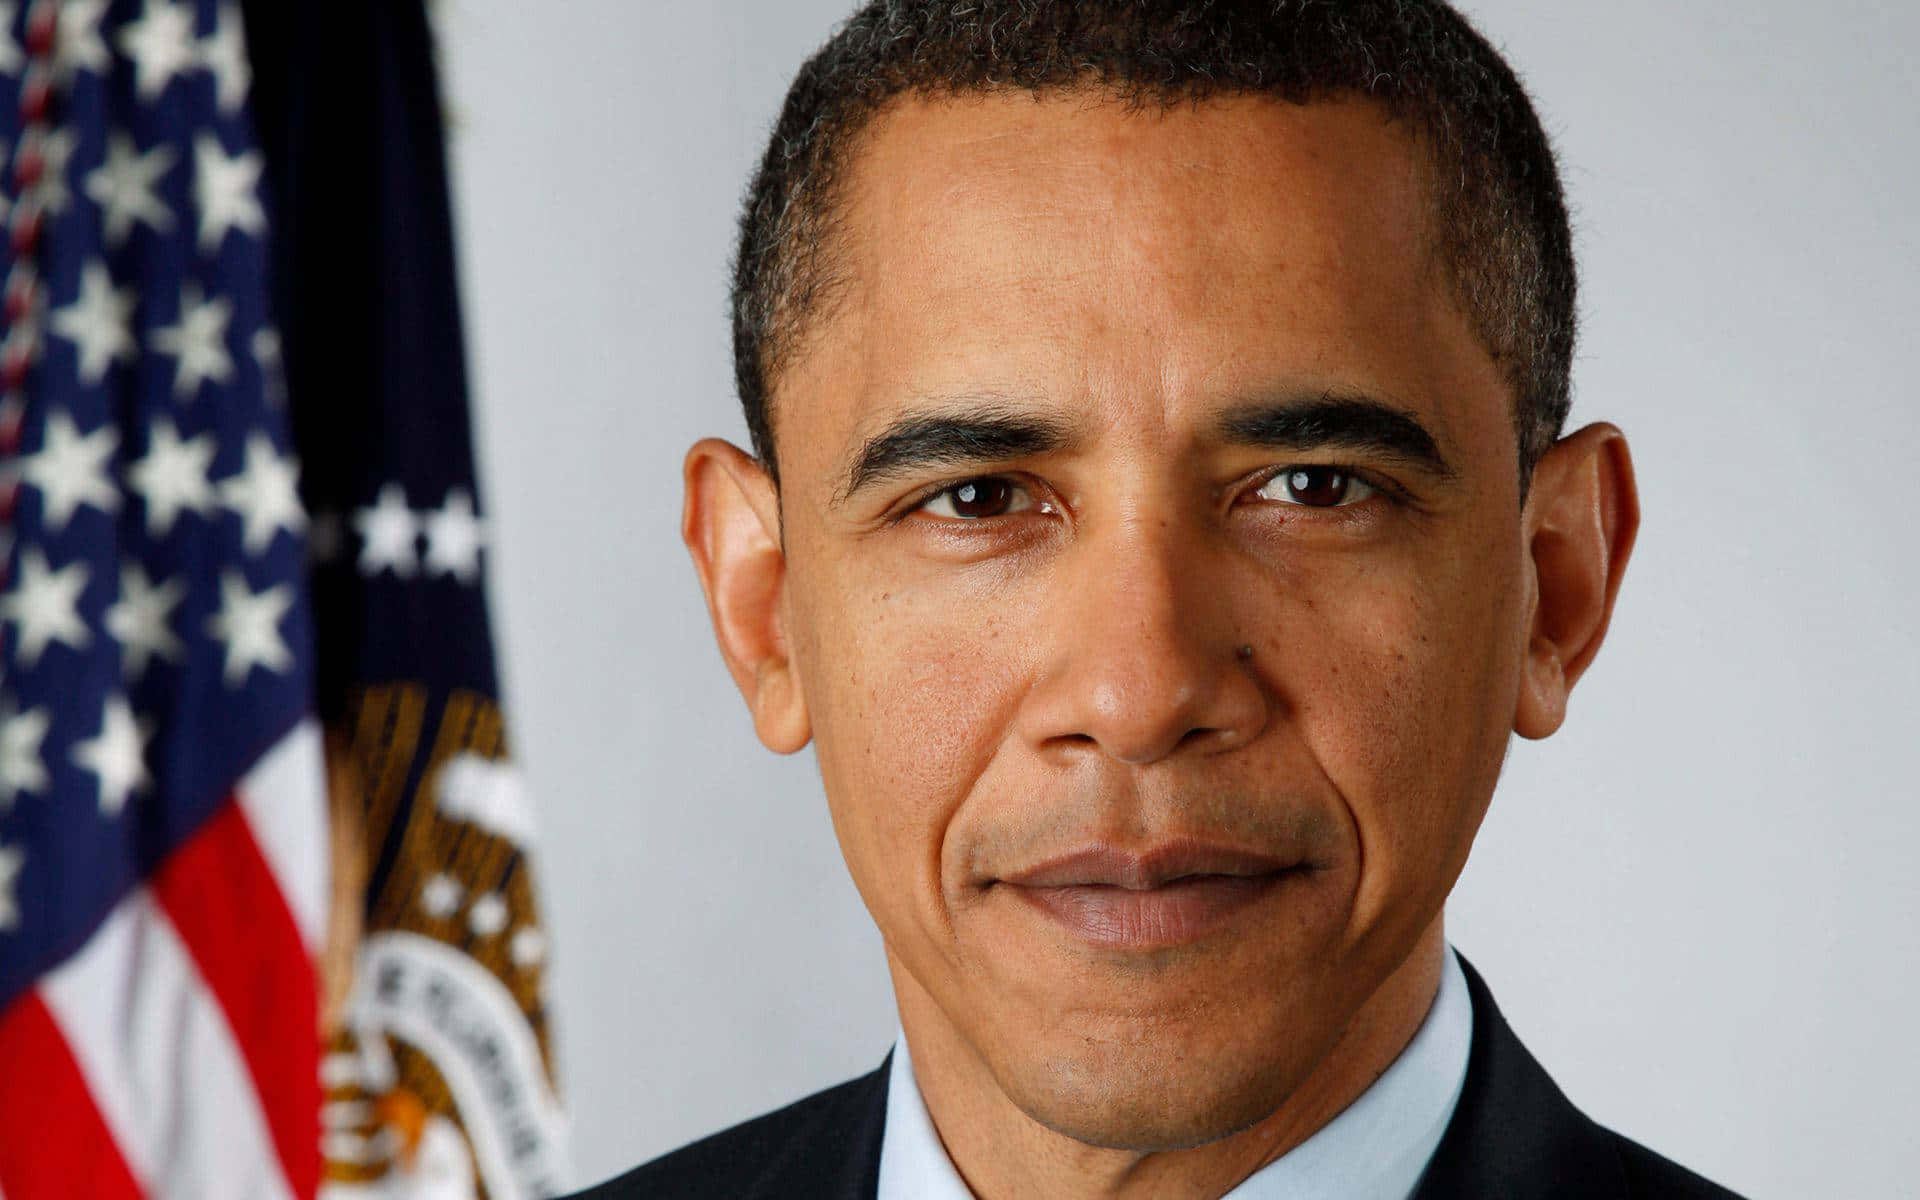 Barack Obama, 44th President of the United States of America